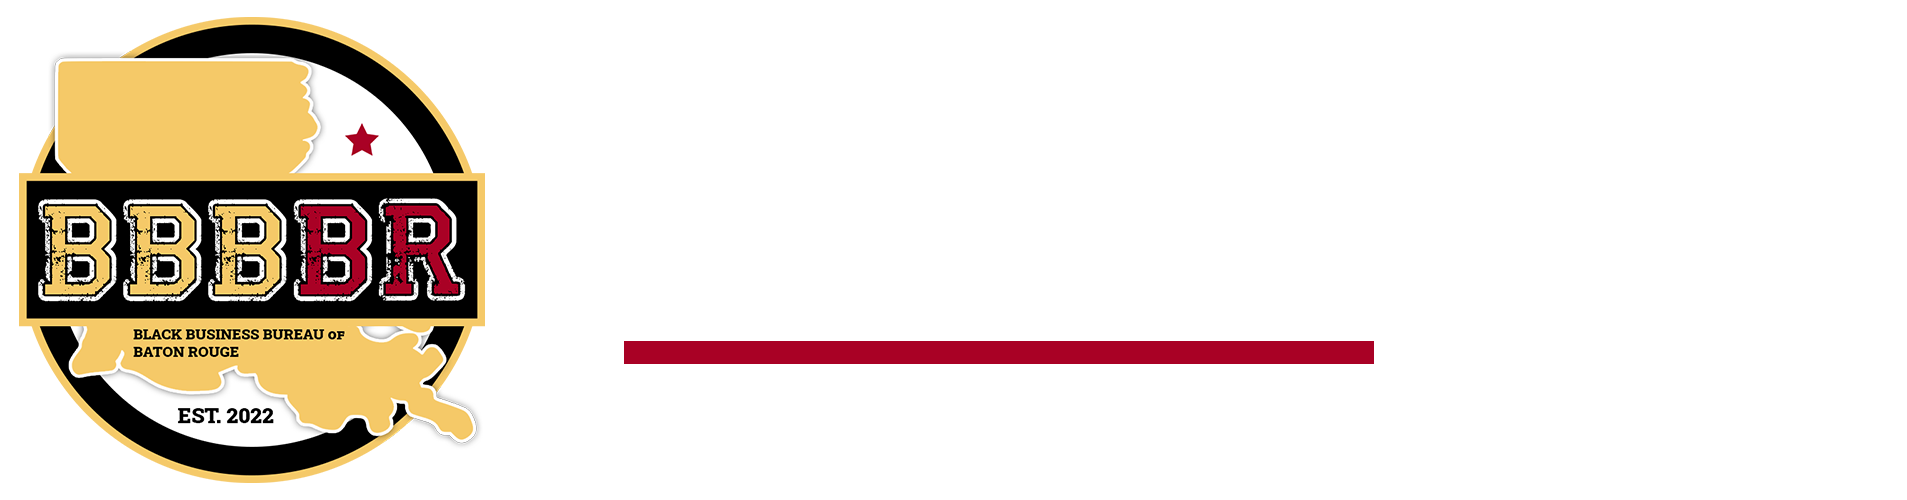 The Black Business Bureau of Baton Rouge